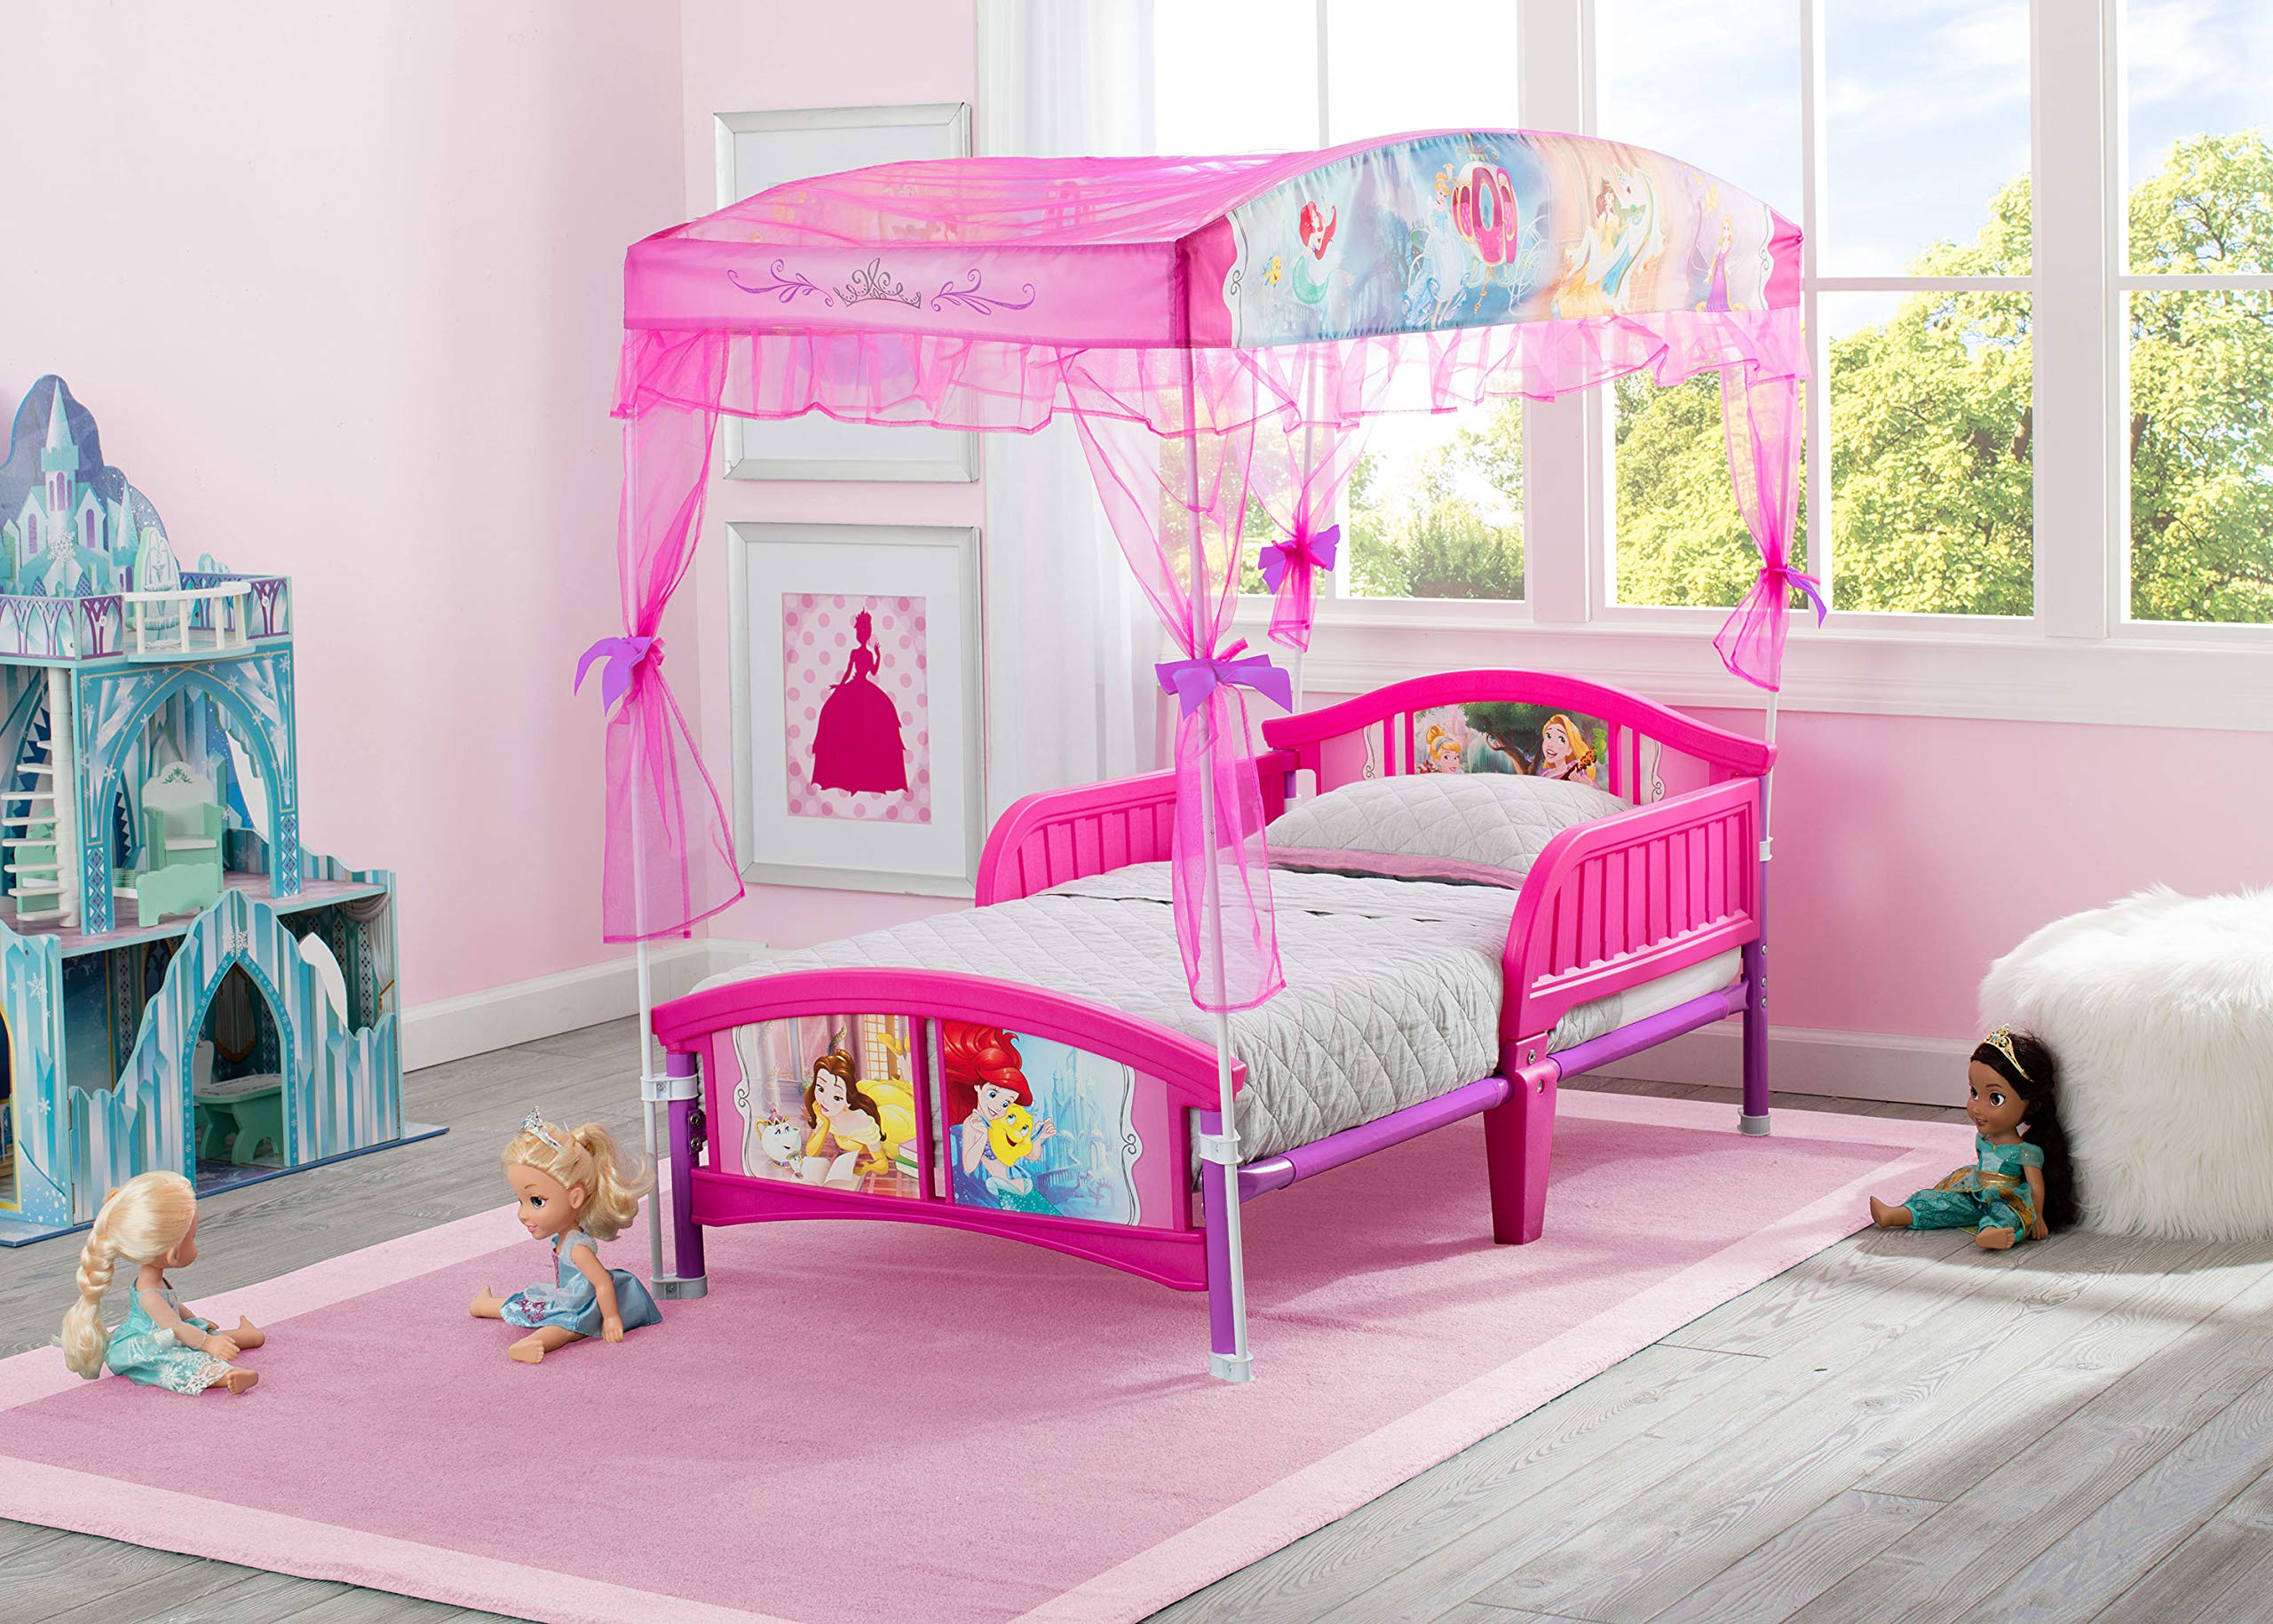 Delta Children Canopy Toddler Bed, Disney Princess